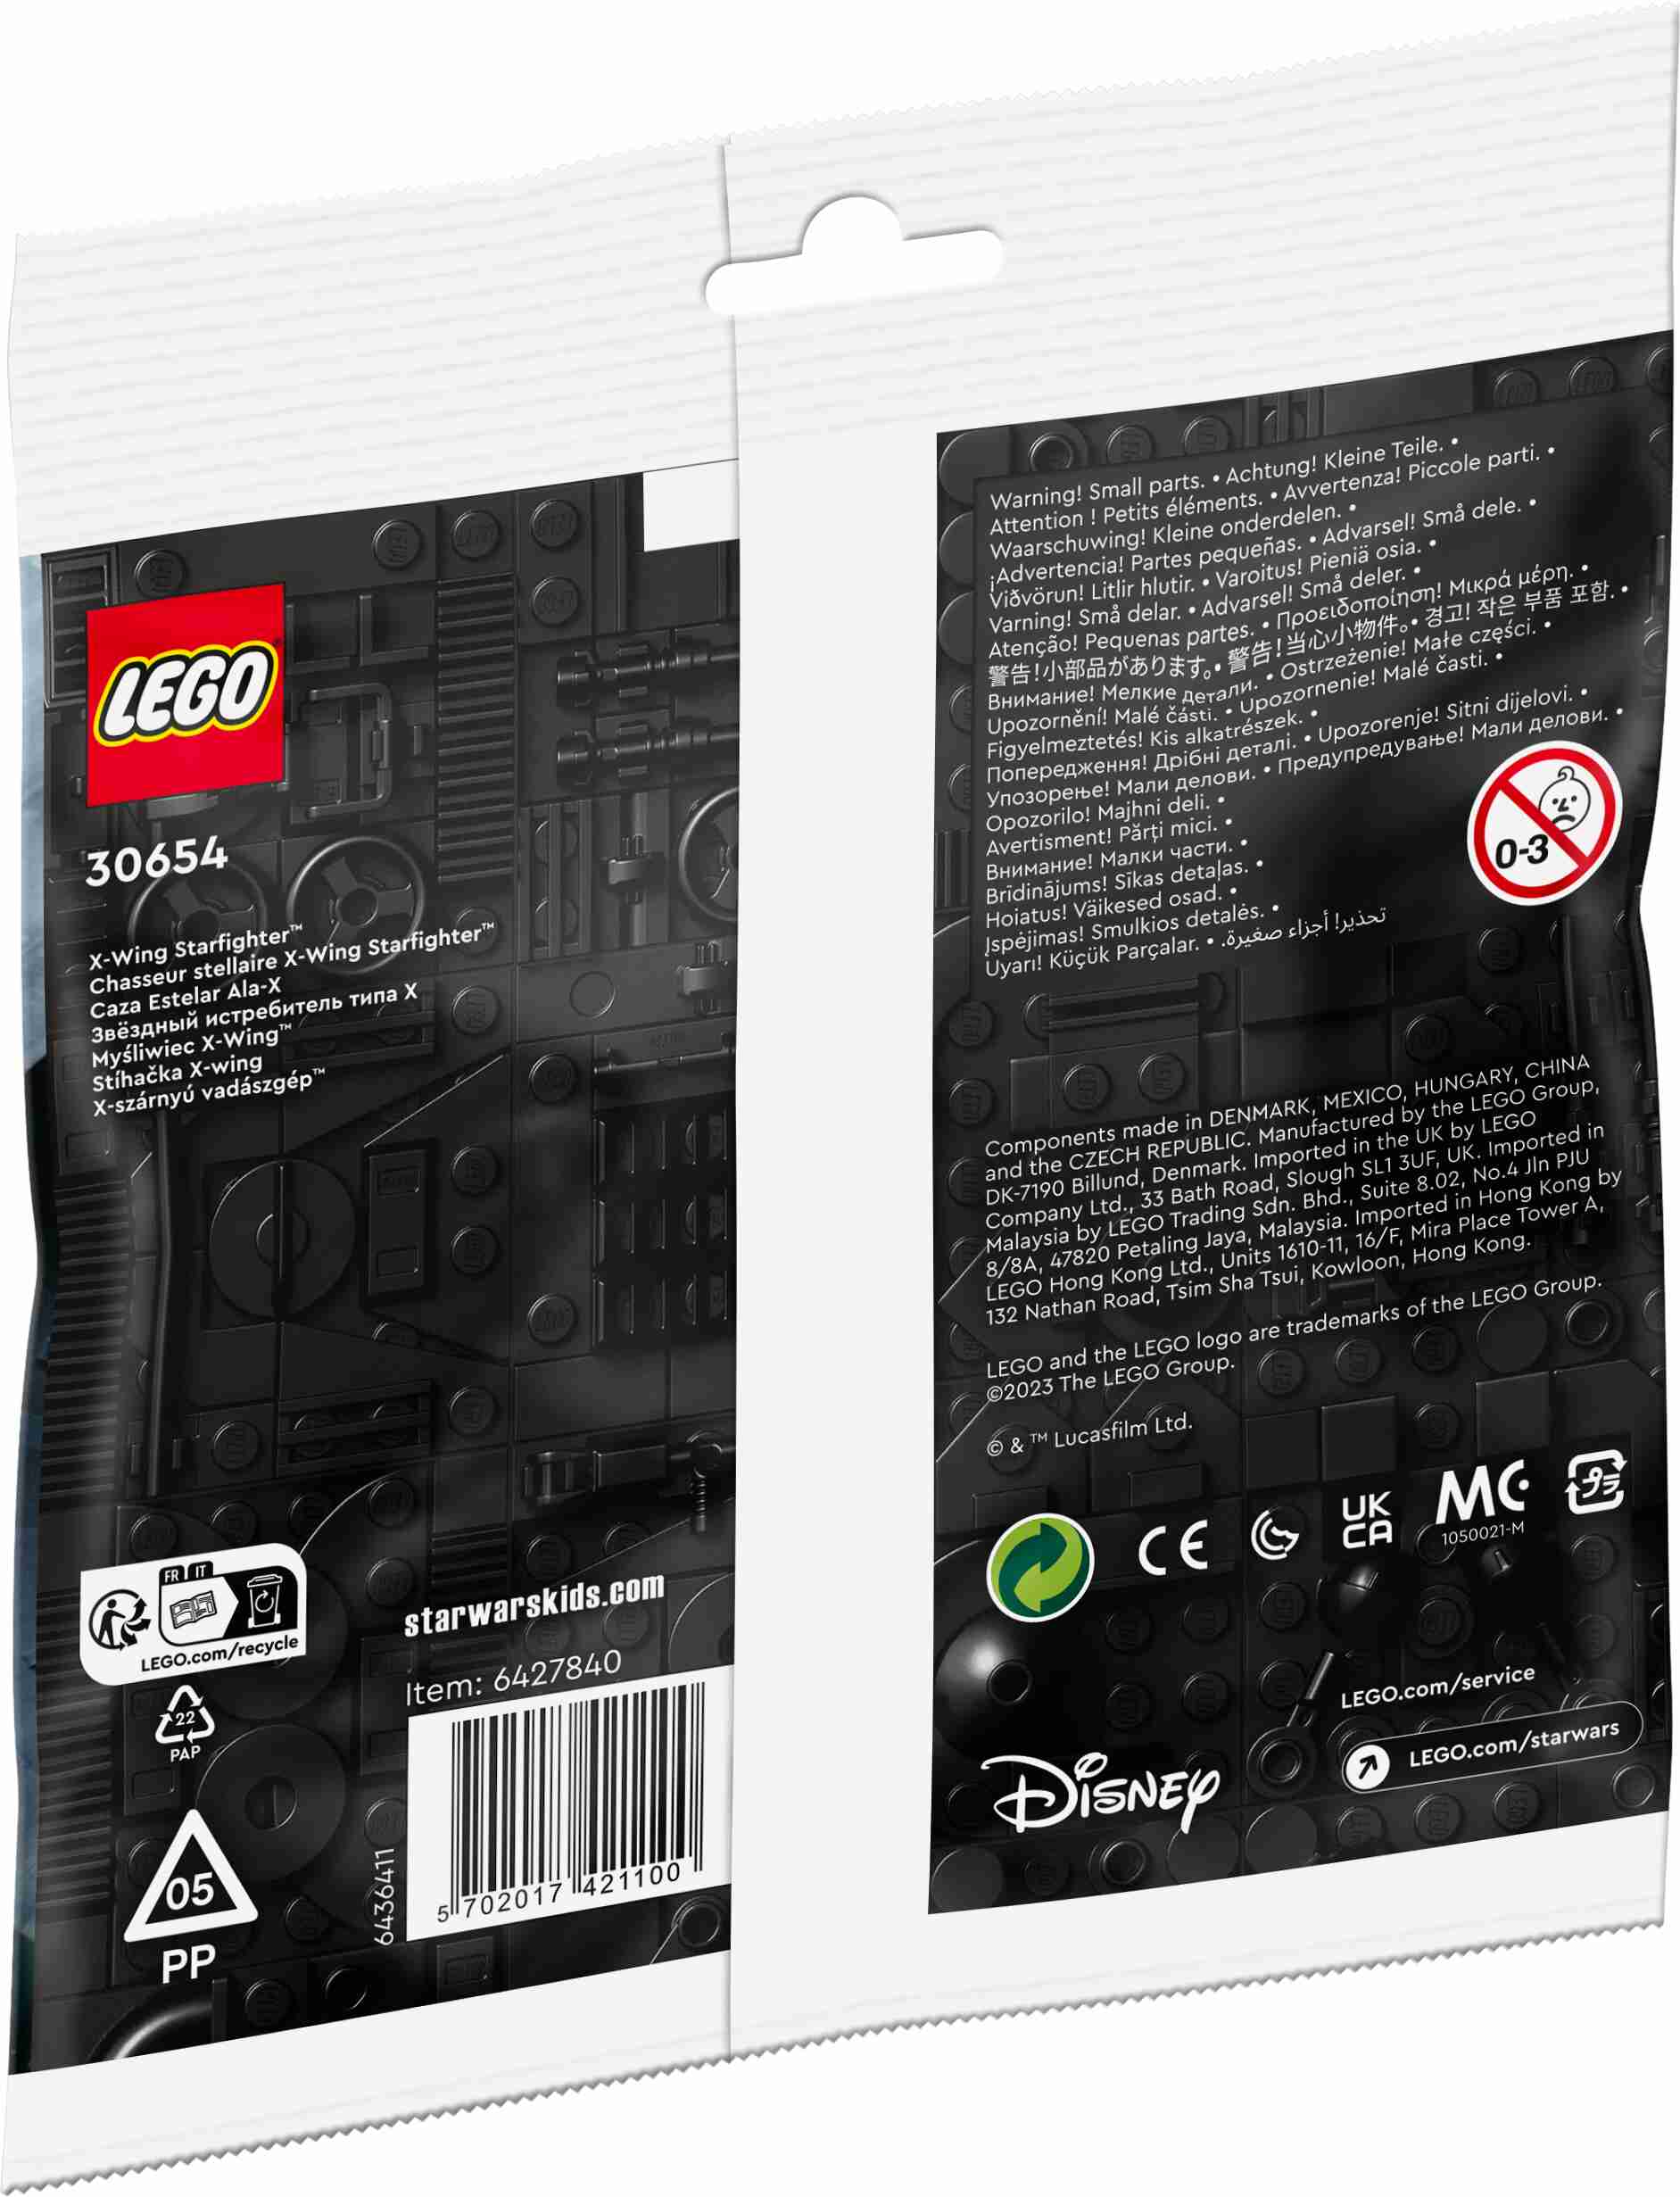 LEGO 30654 Star Wars X-Wing Starfighter